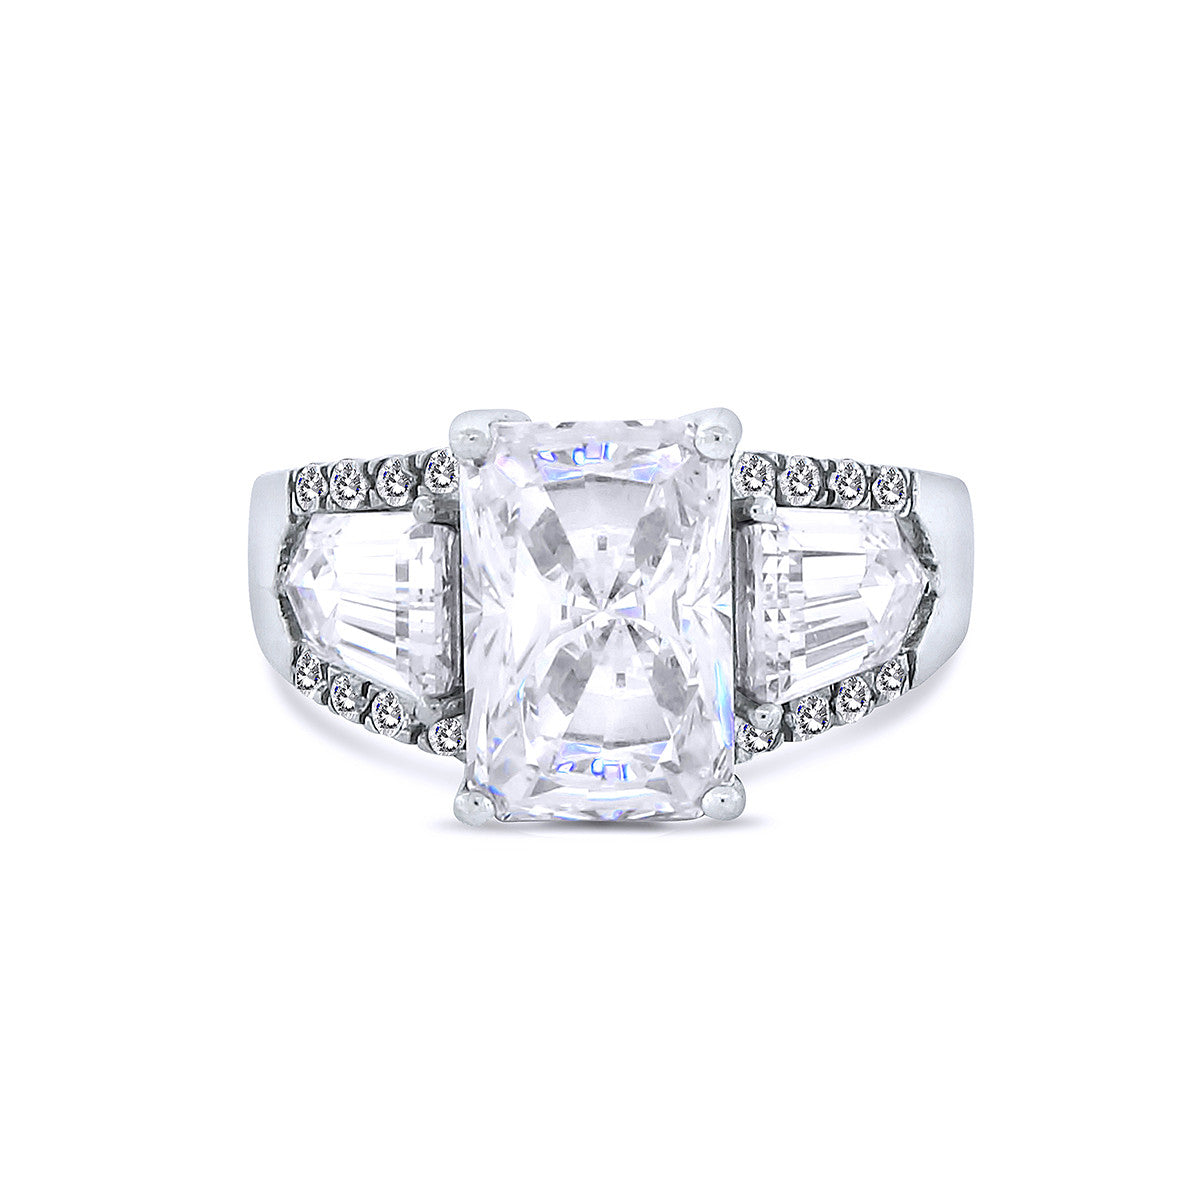 Buy Glowing Heart Diamond Ring At Best Price | Karuri Jewellers